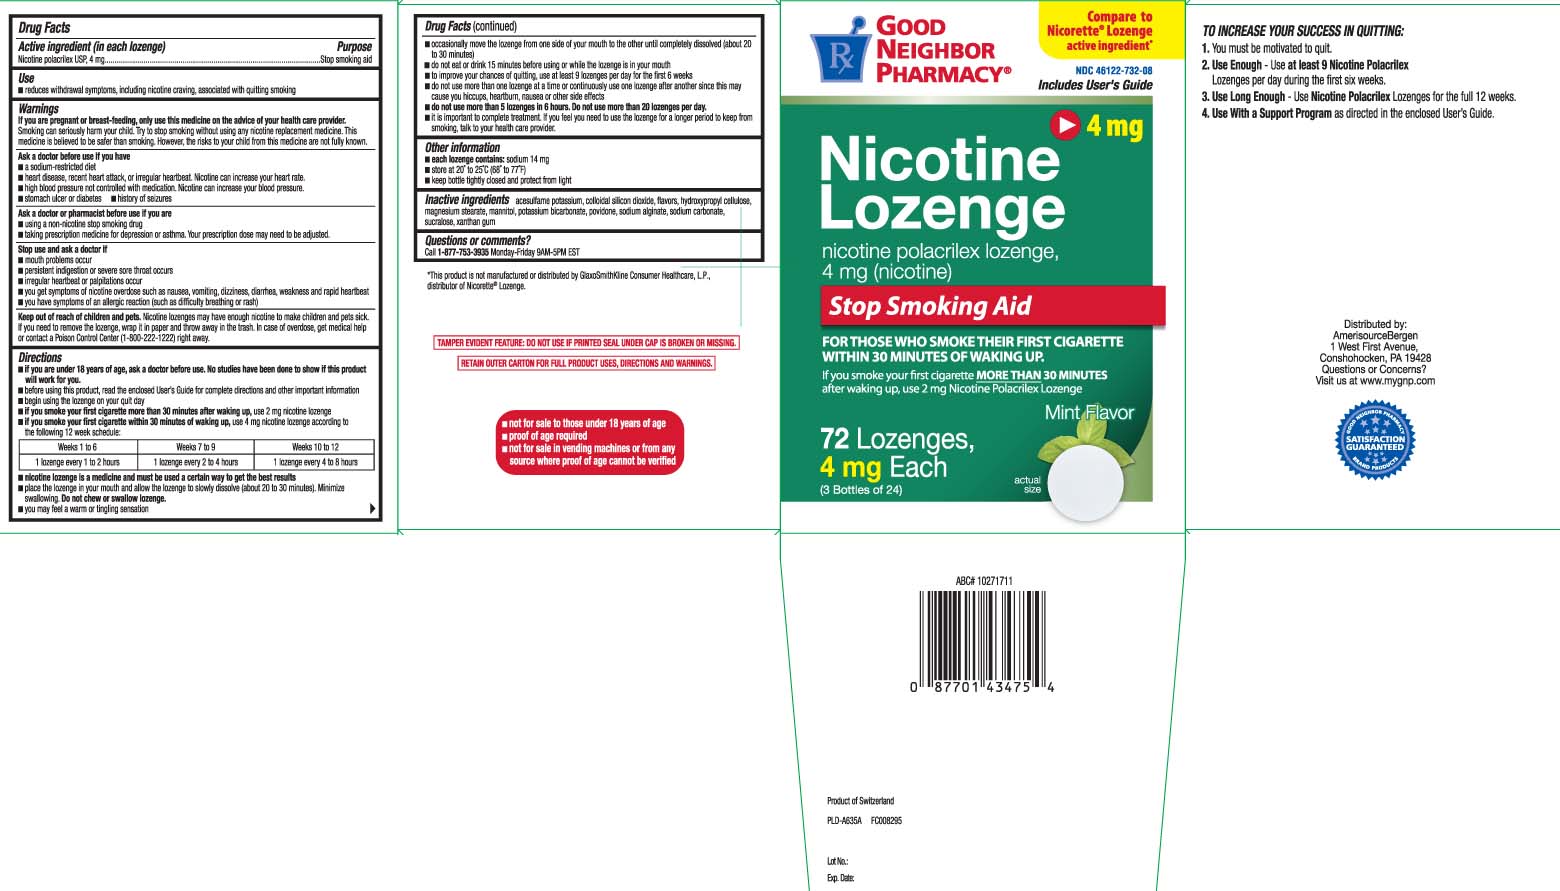 Nicotine Polacrilex USP, 4 mg